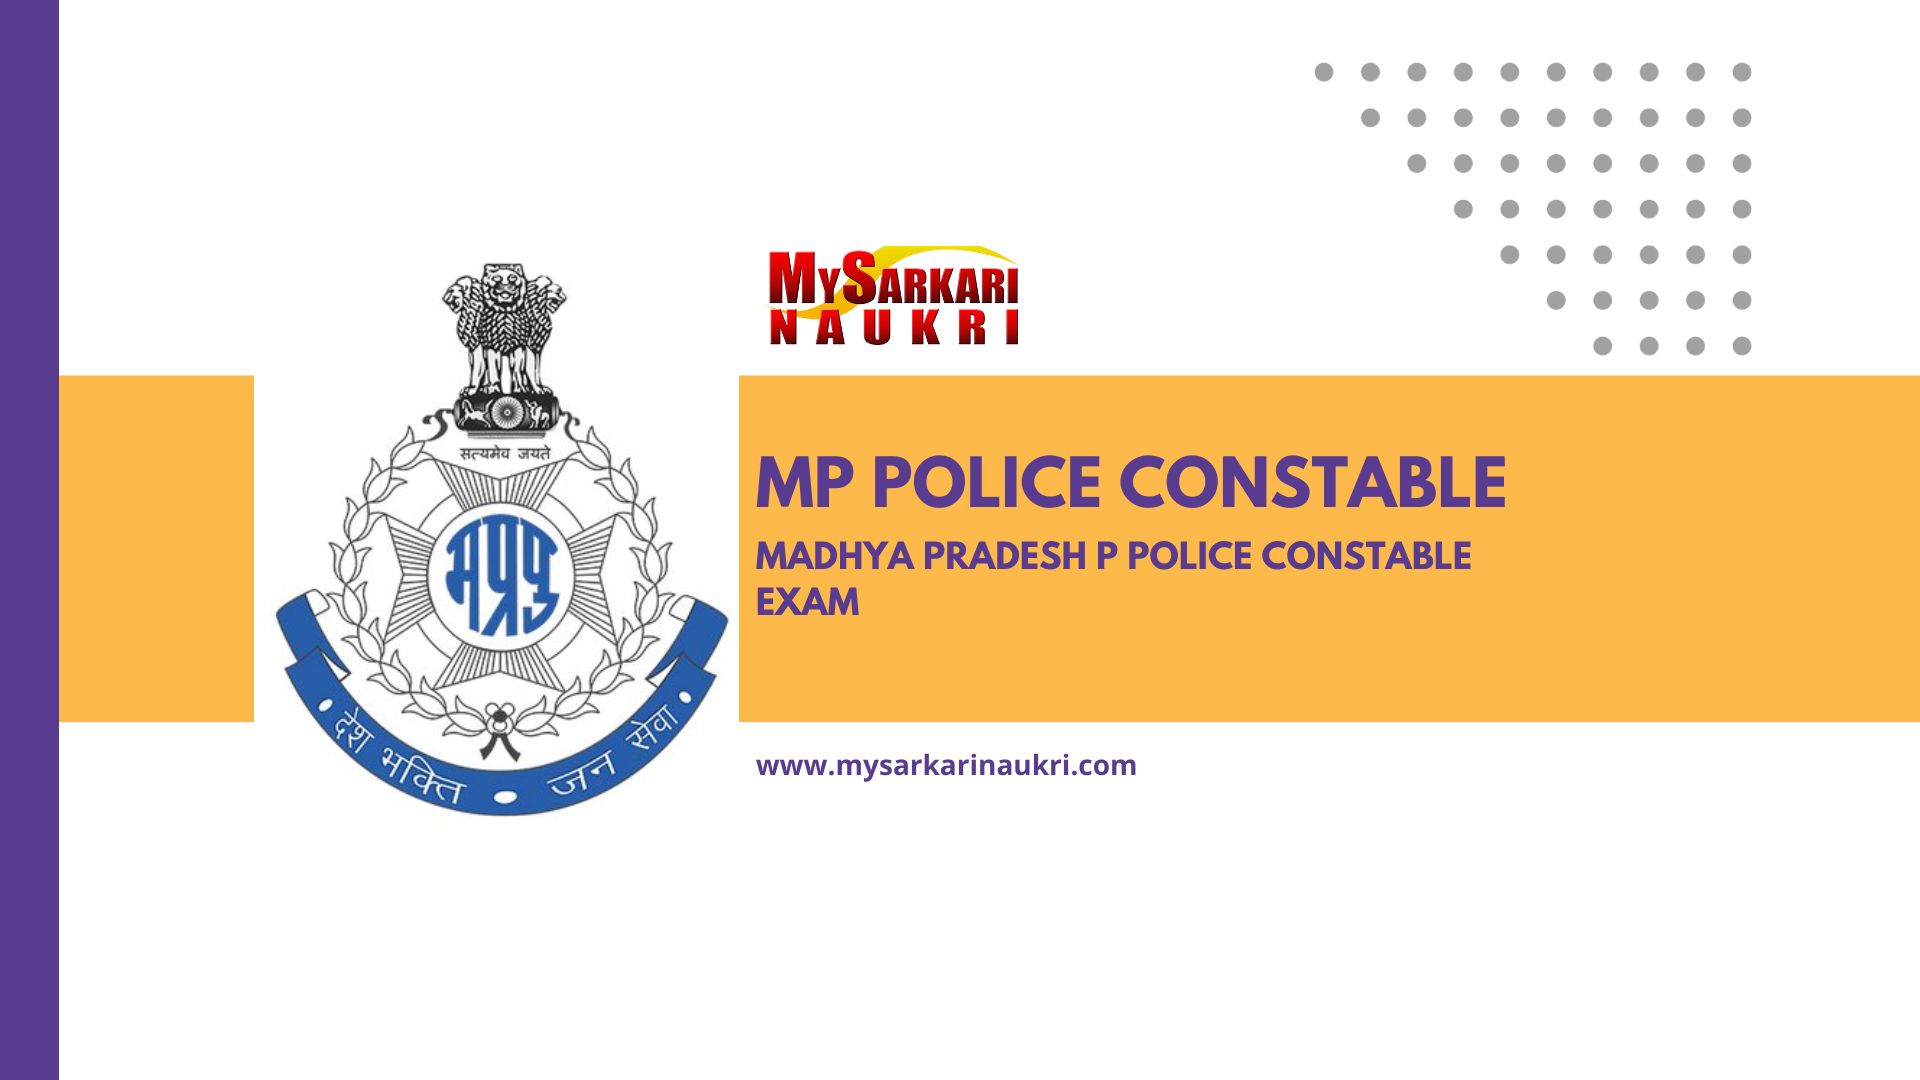 MP Police Logo - Photo #515 - Crush Logo - Free Branded Logo & Stock Photos  Download